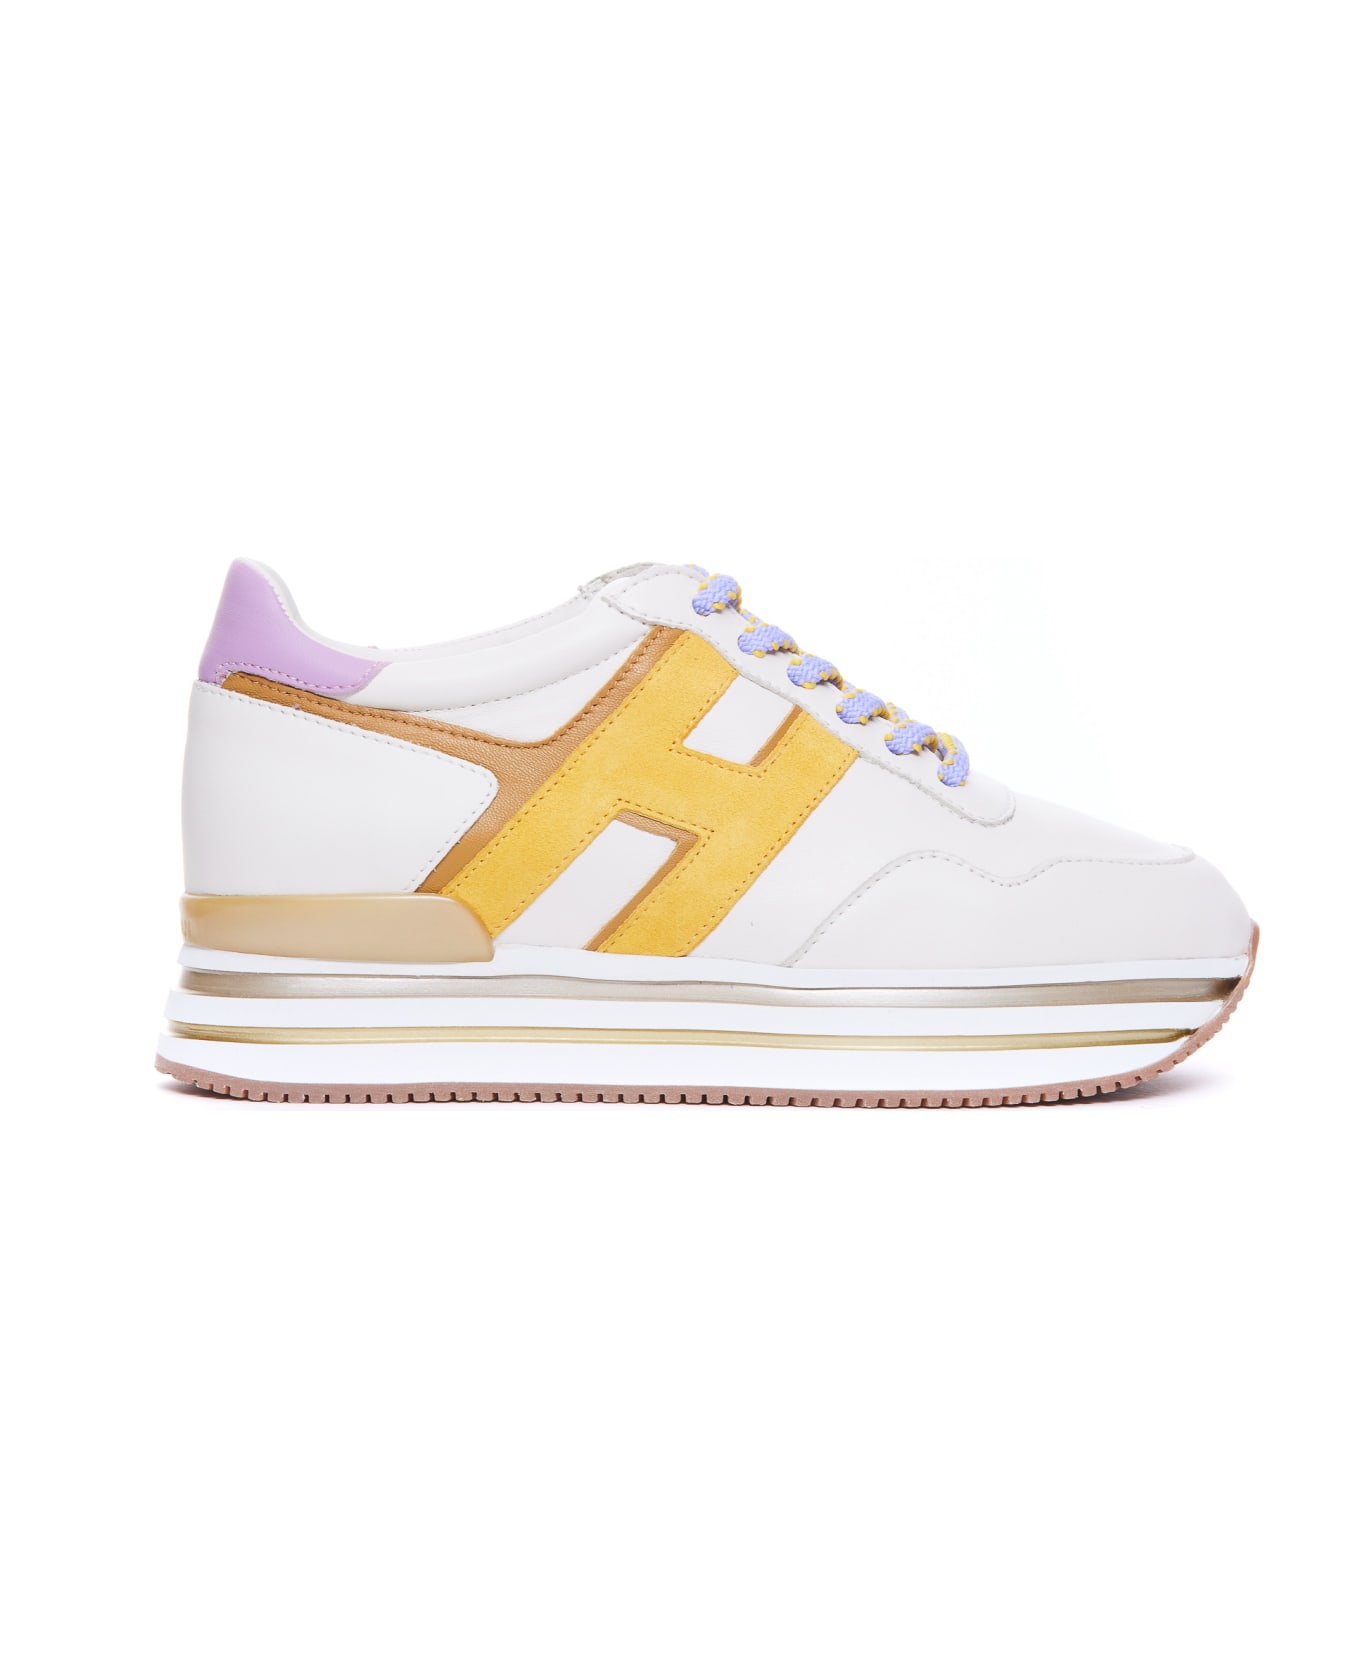 Hogan H222 Sneakers - White